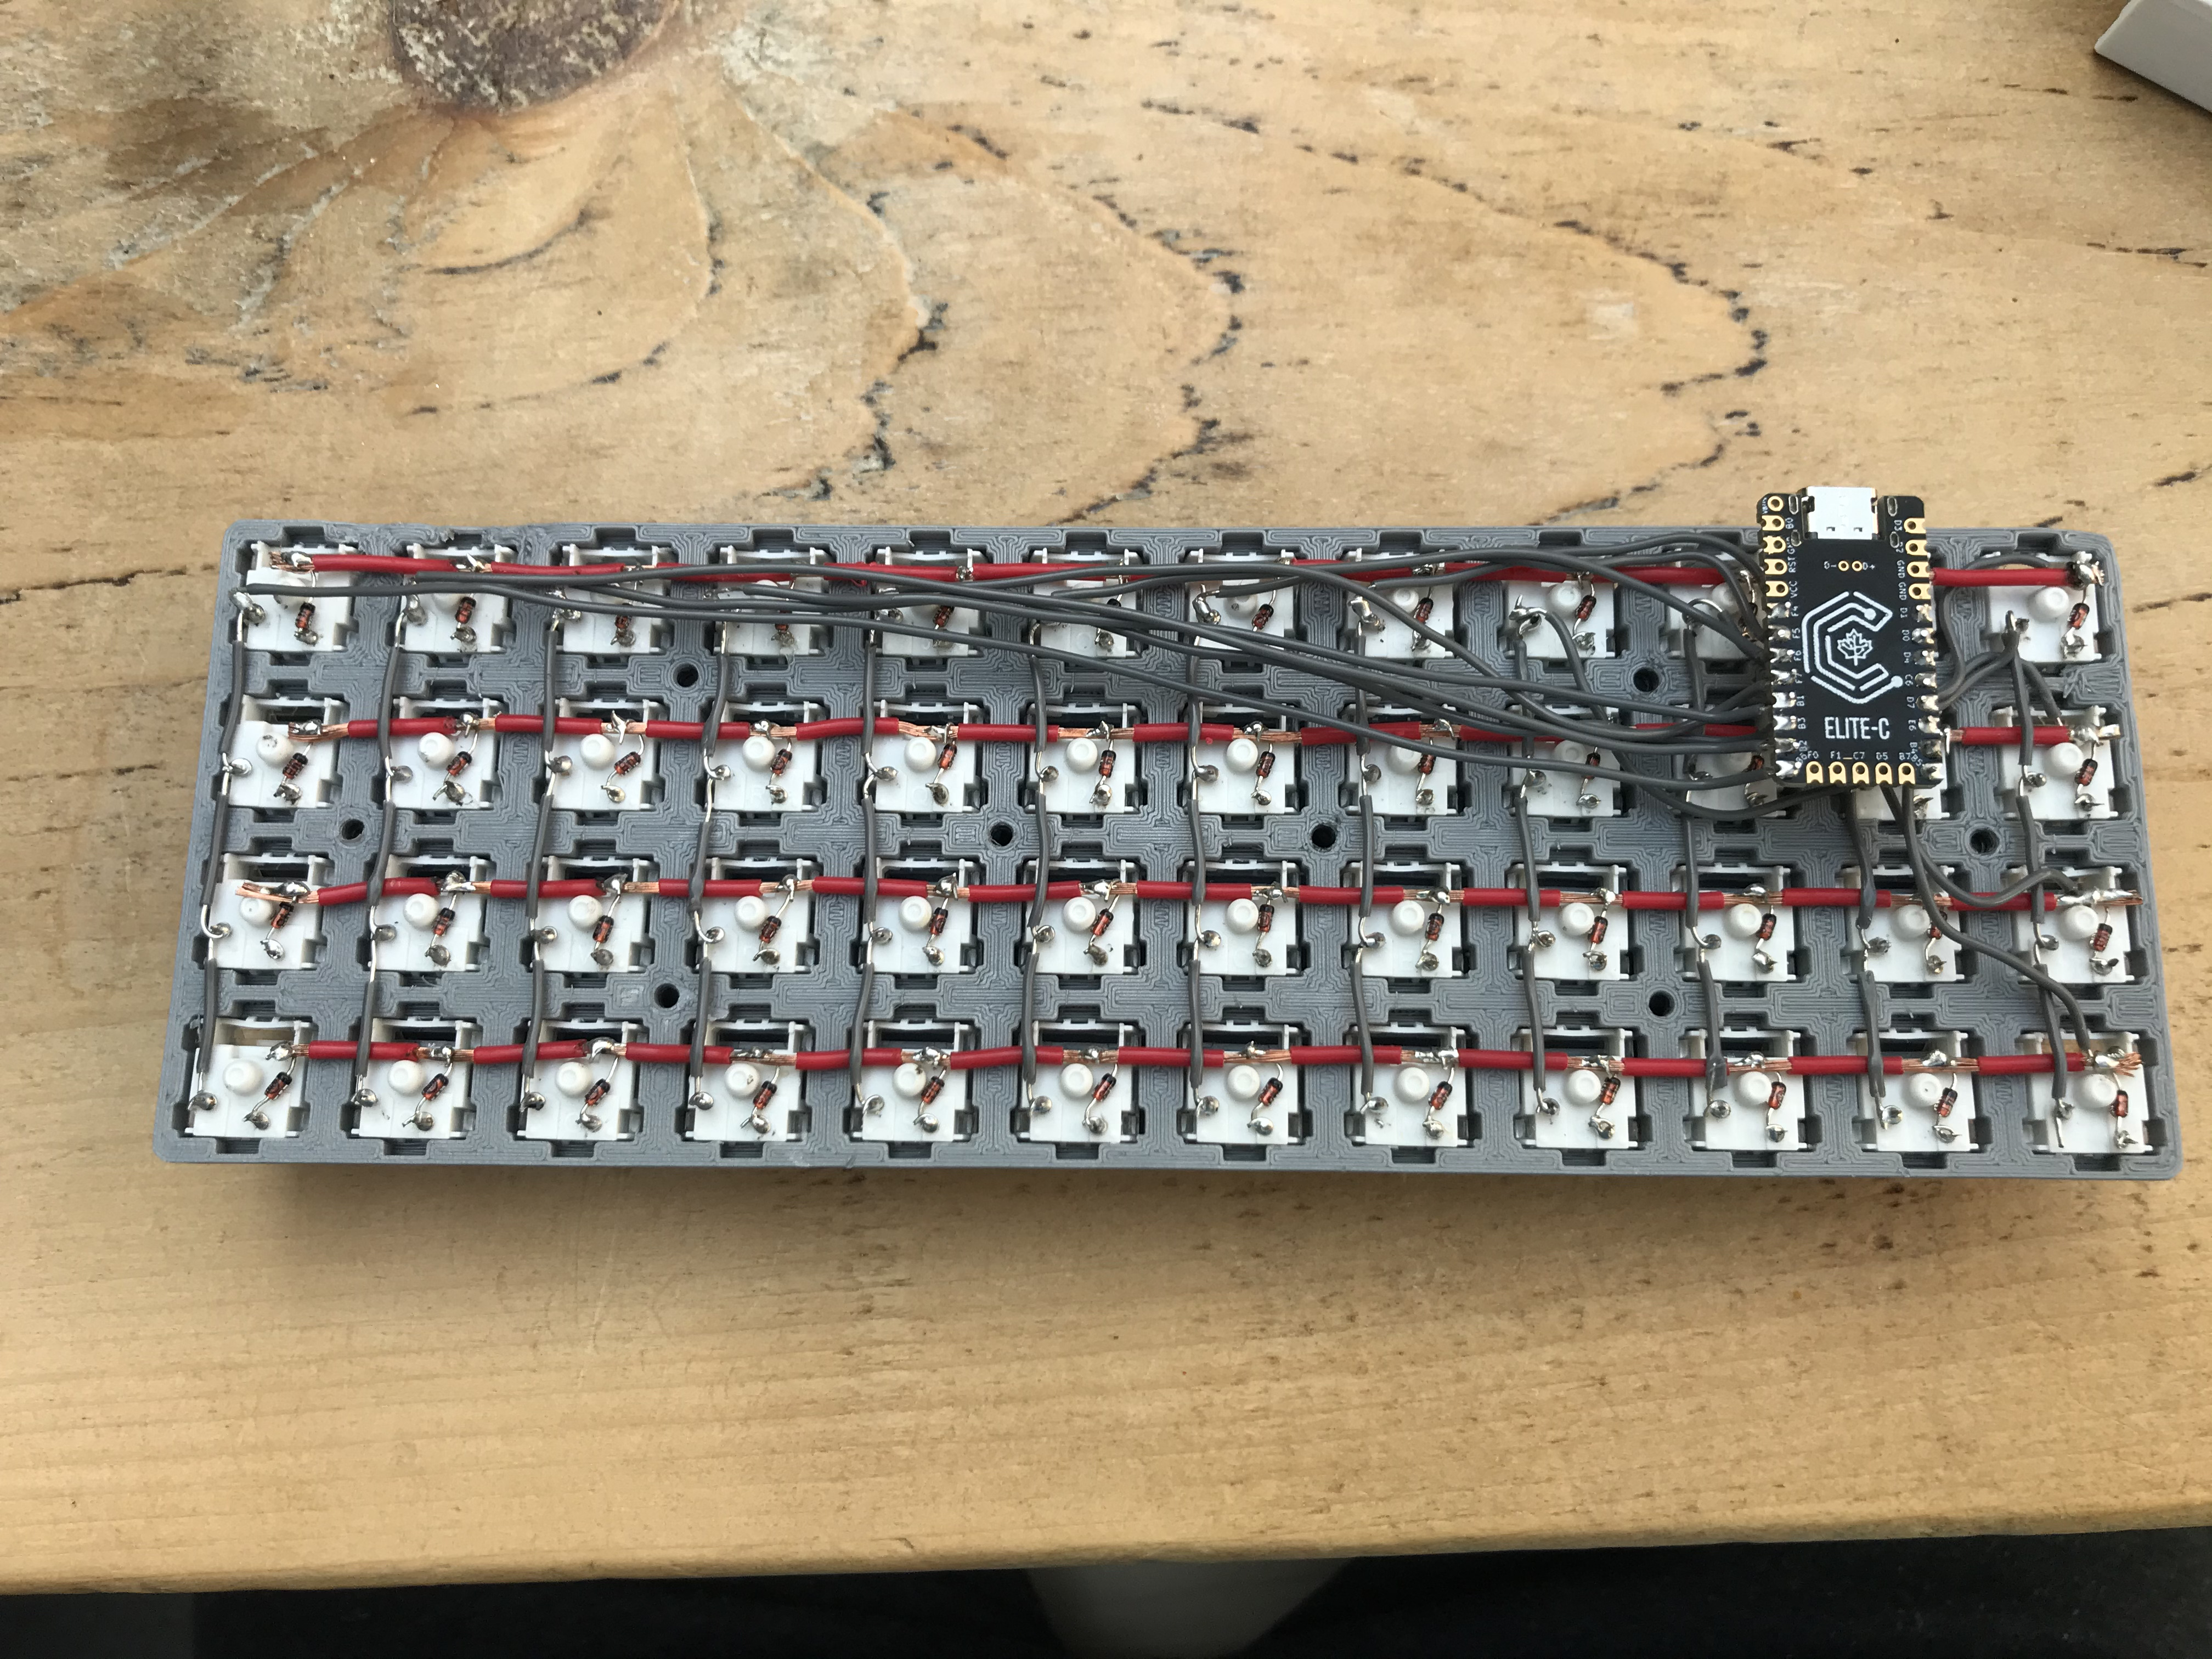 Hand-wired key matrix on my planck